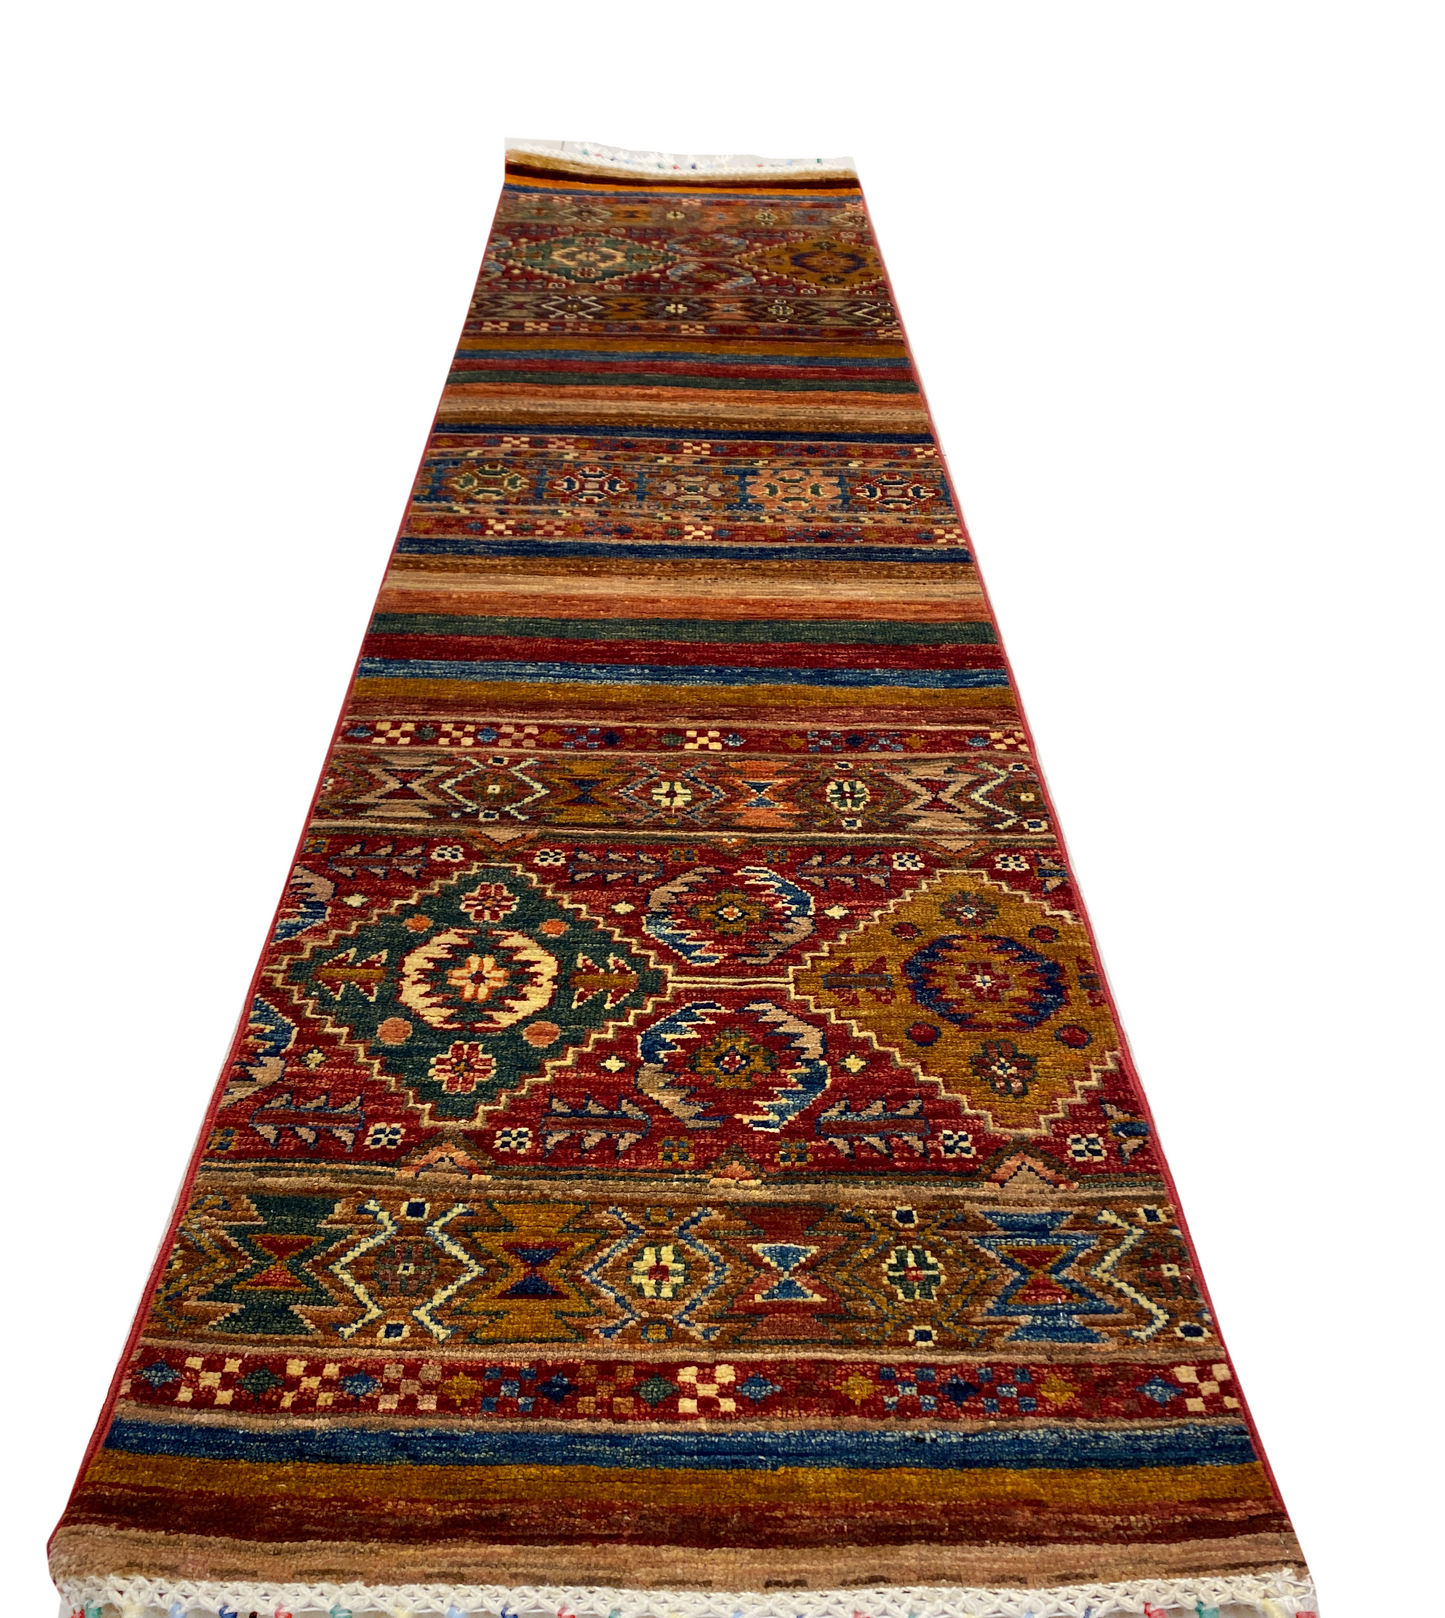 Şirvan Runner Carpet 201 X 50 cm